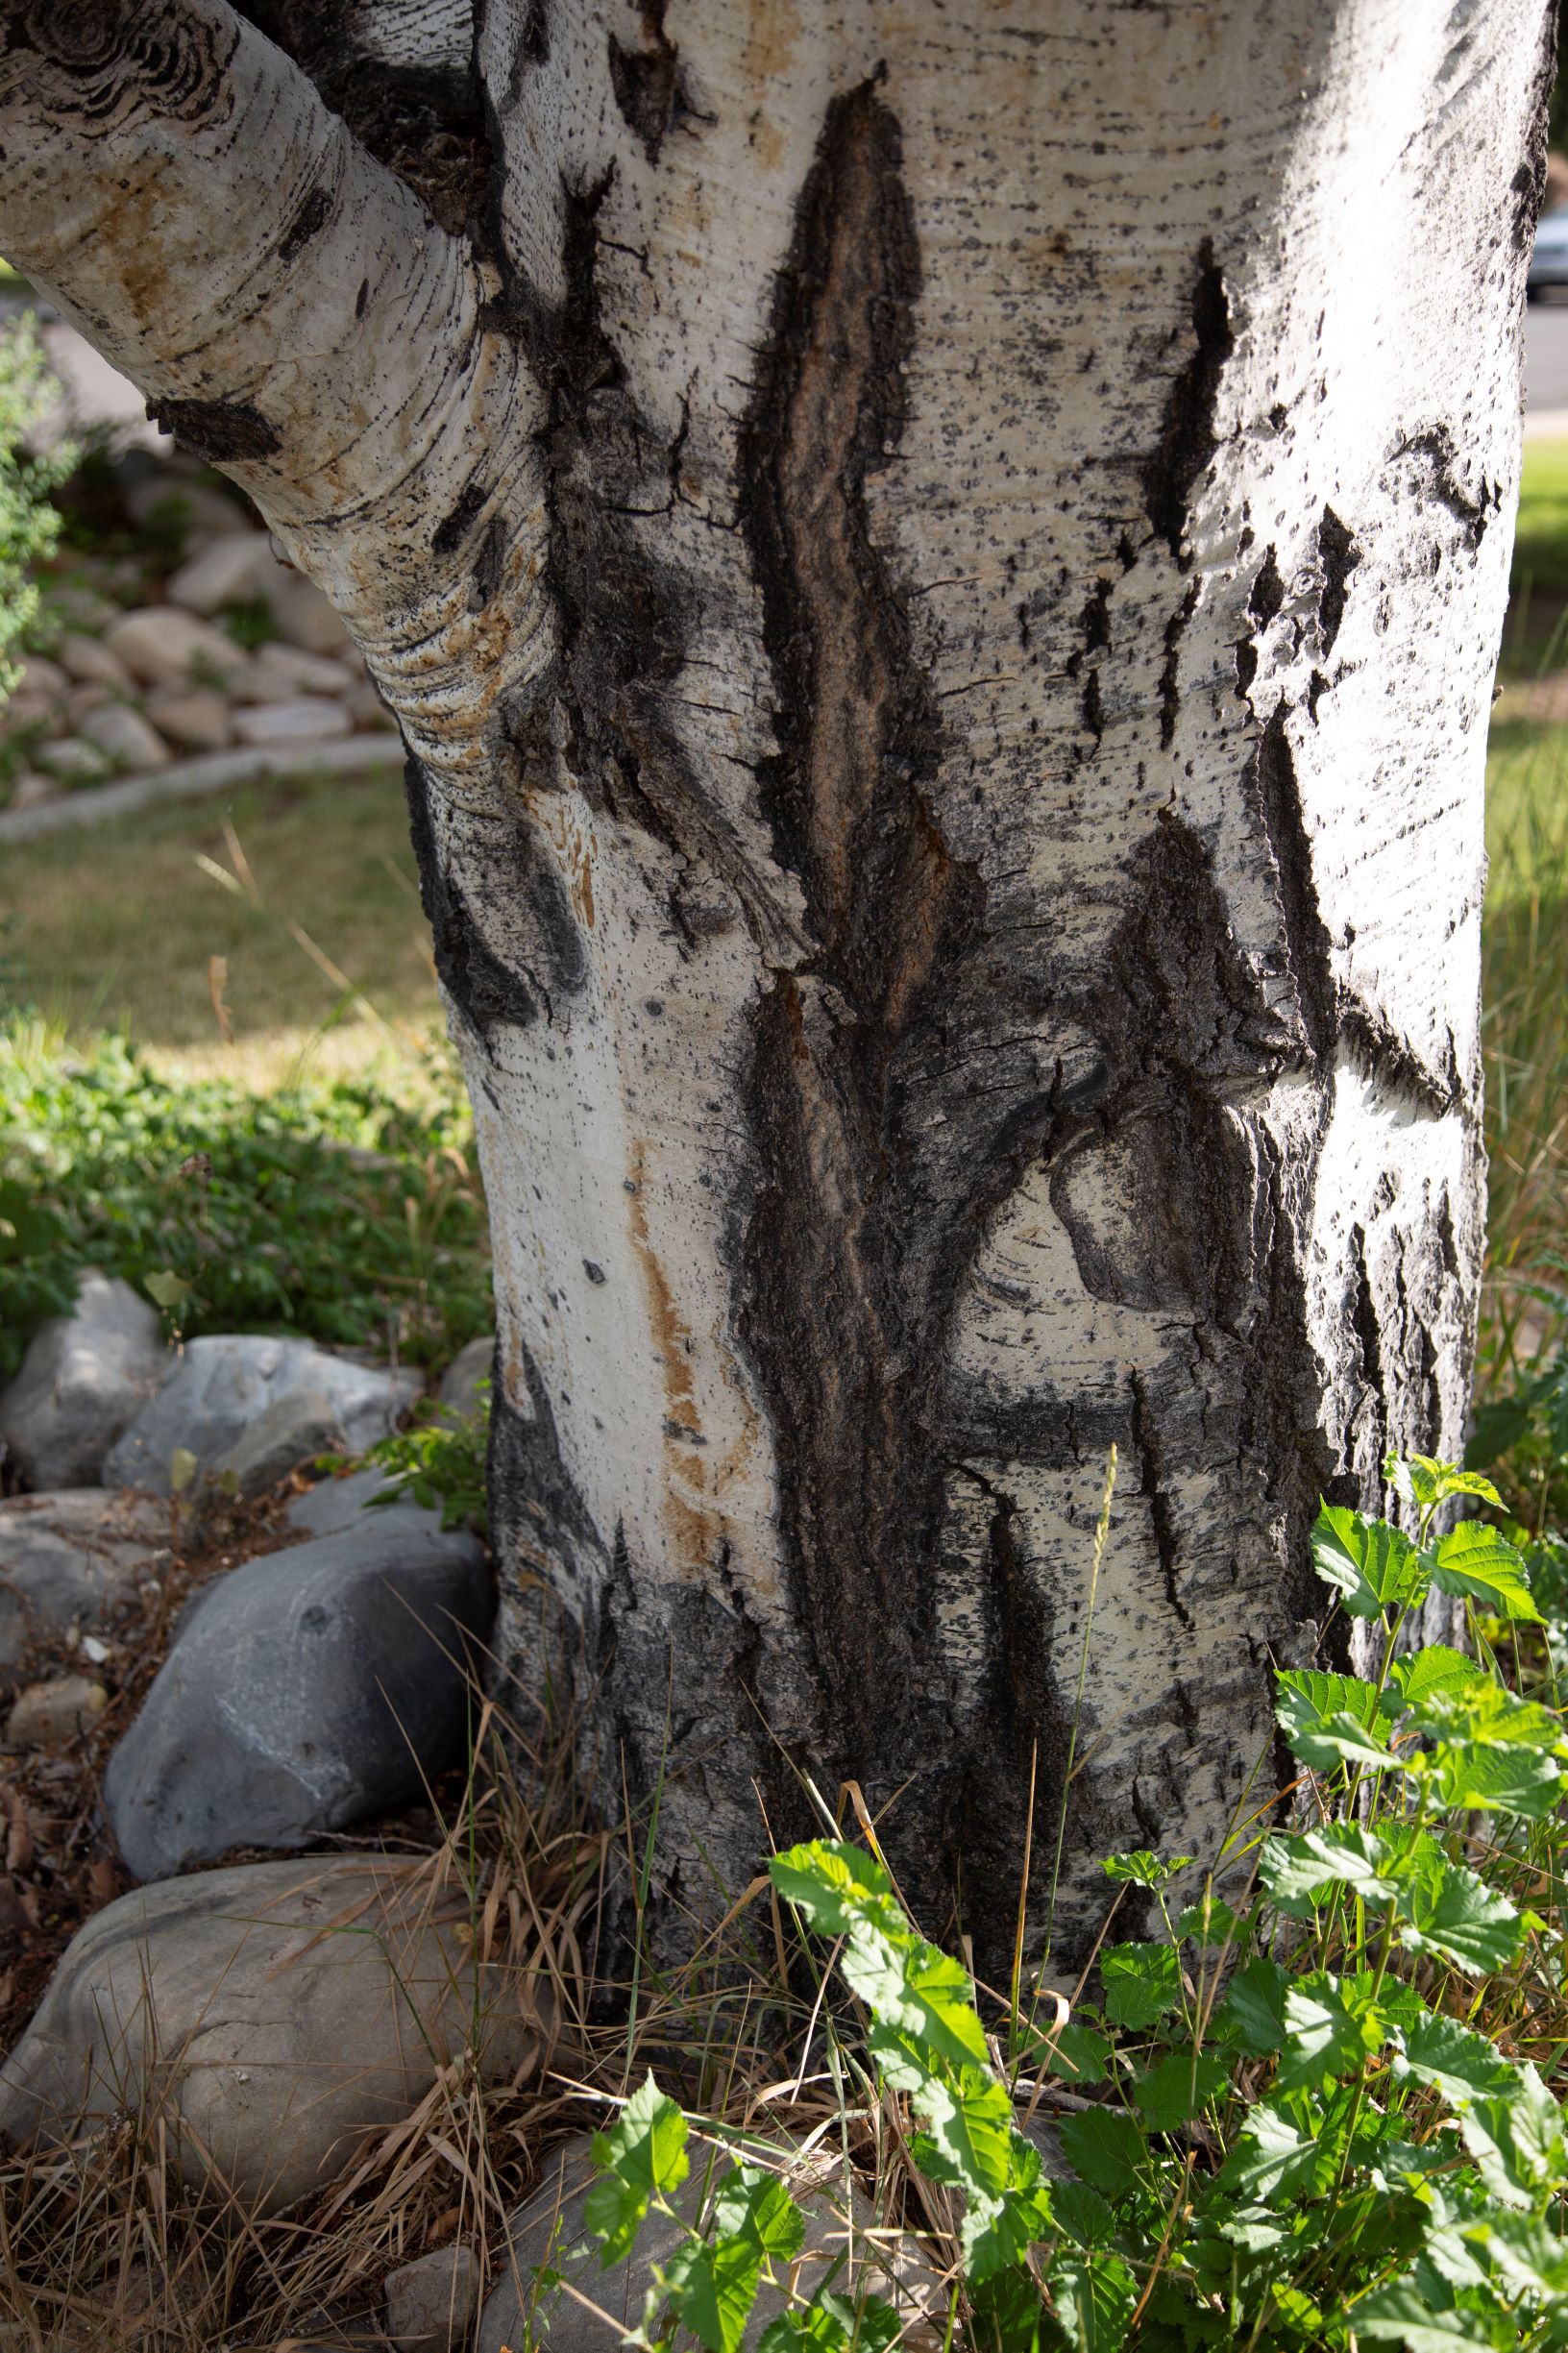 Sunscald Damage on an Aspen Tree